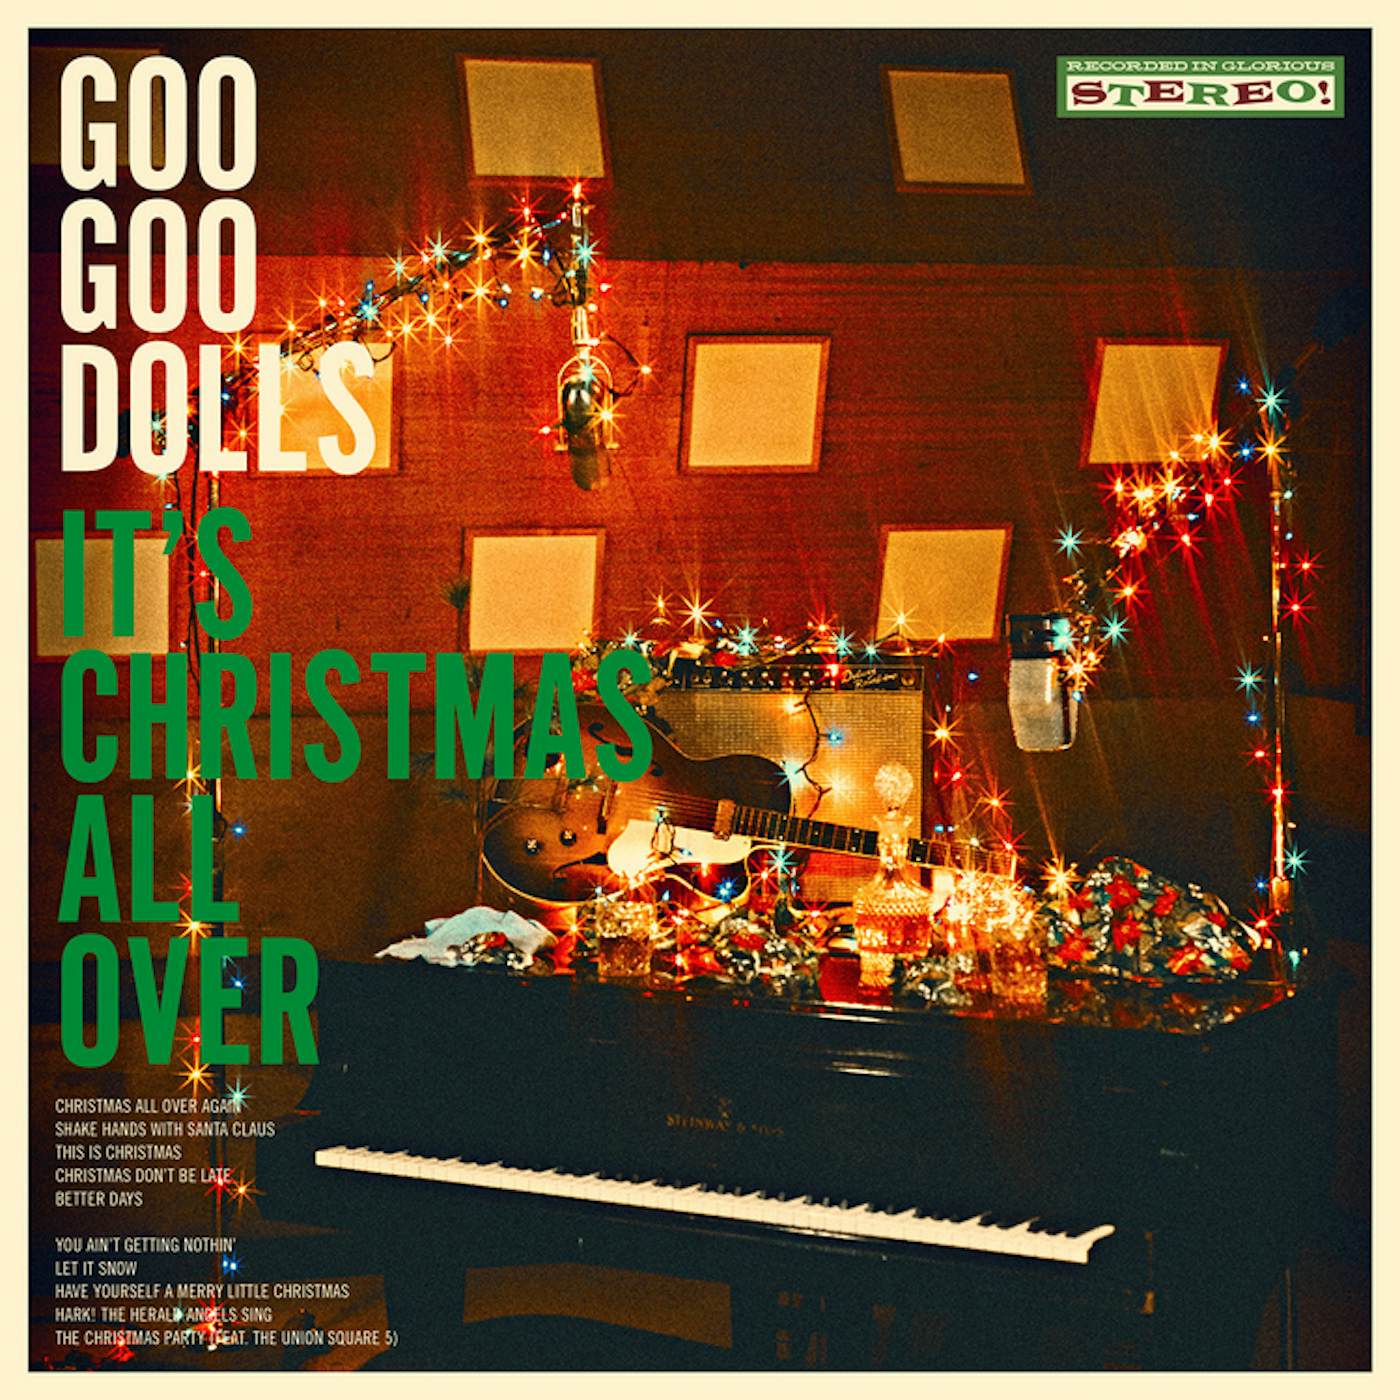 The Goo Goo Dolls IT'S CHRISTMAS ALL OVER CD